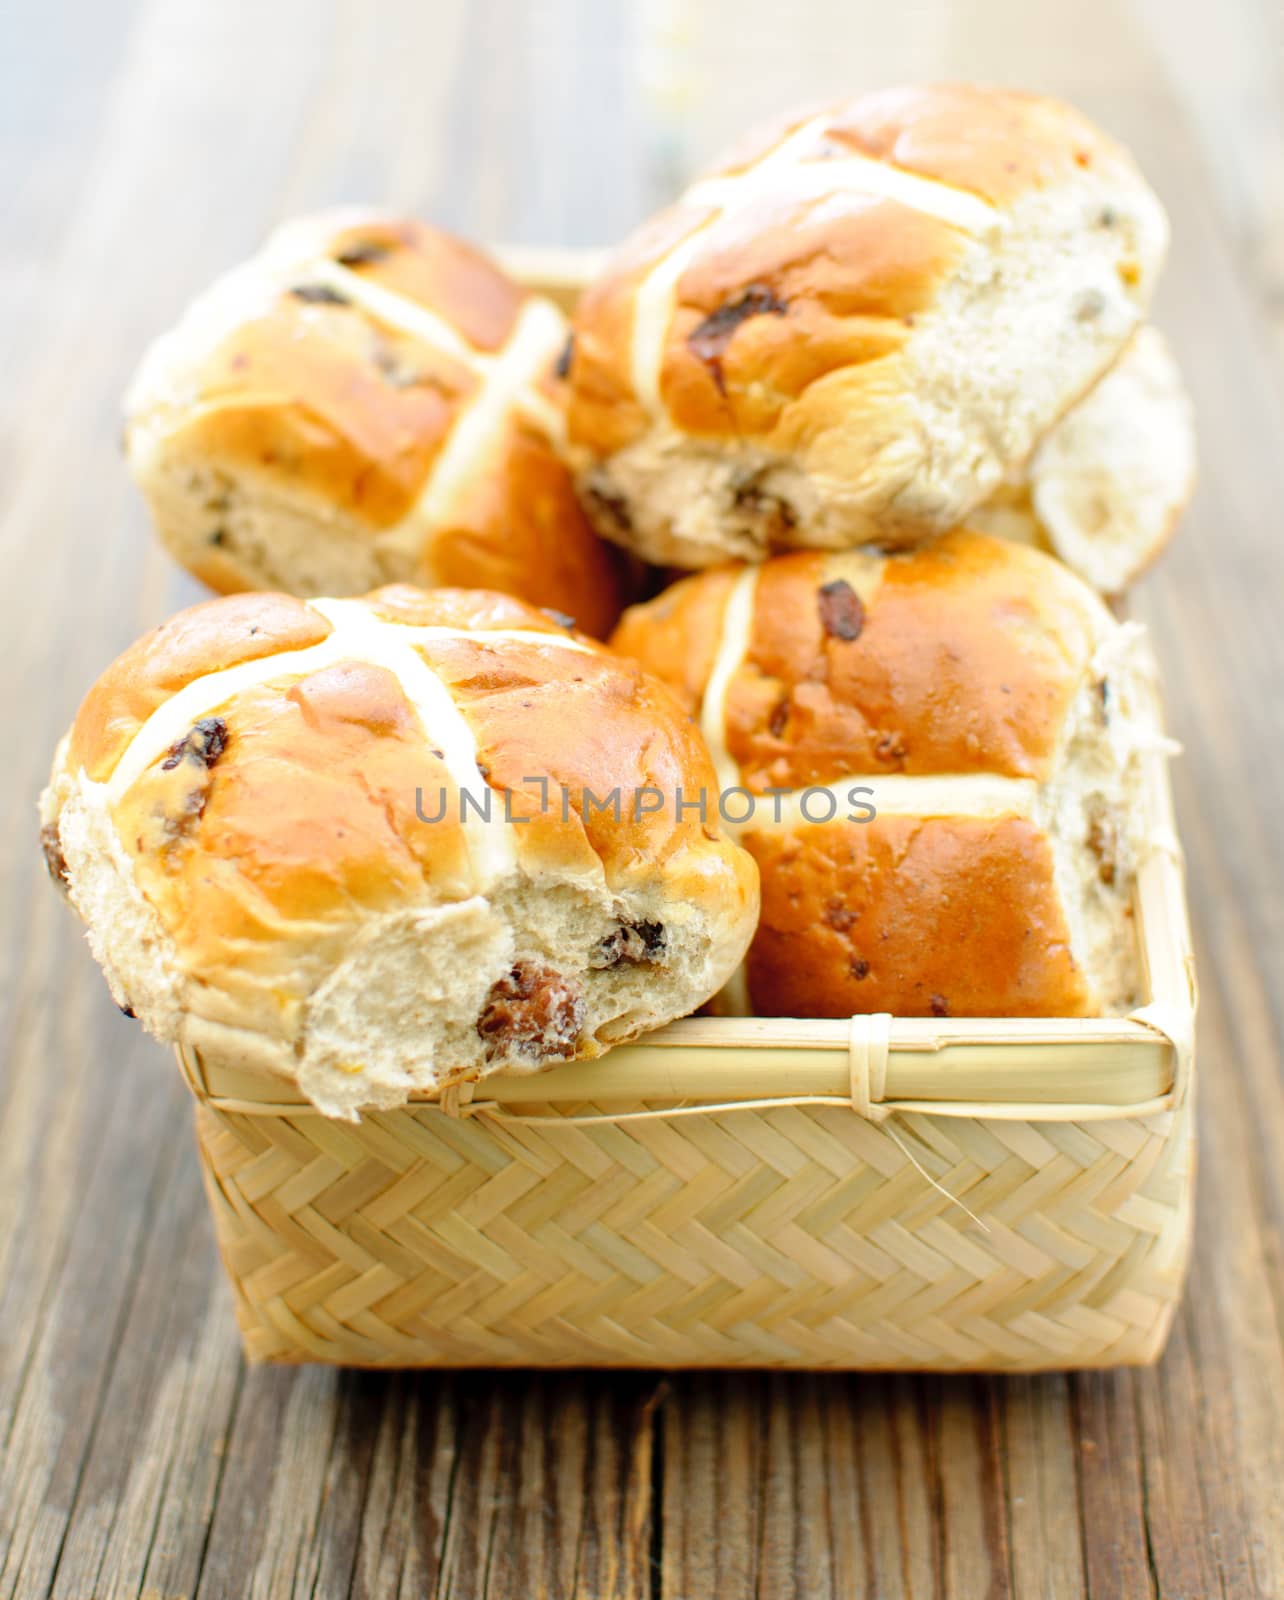 Freshly baked hot cross buns inside a basket 